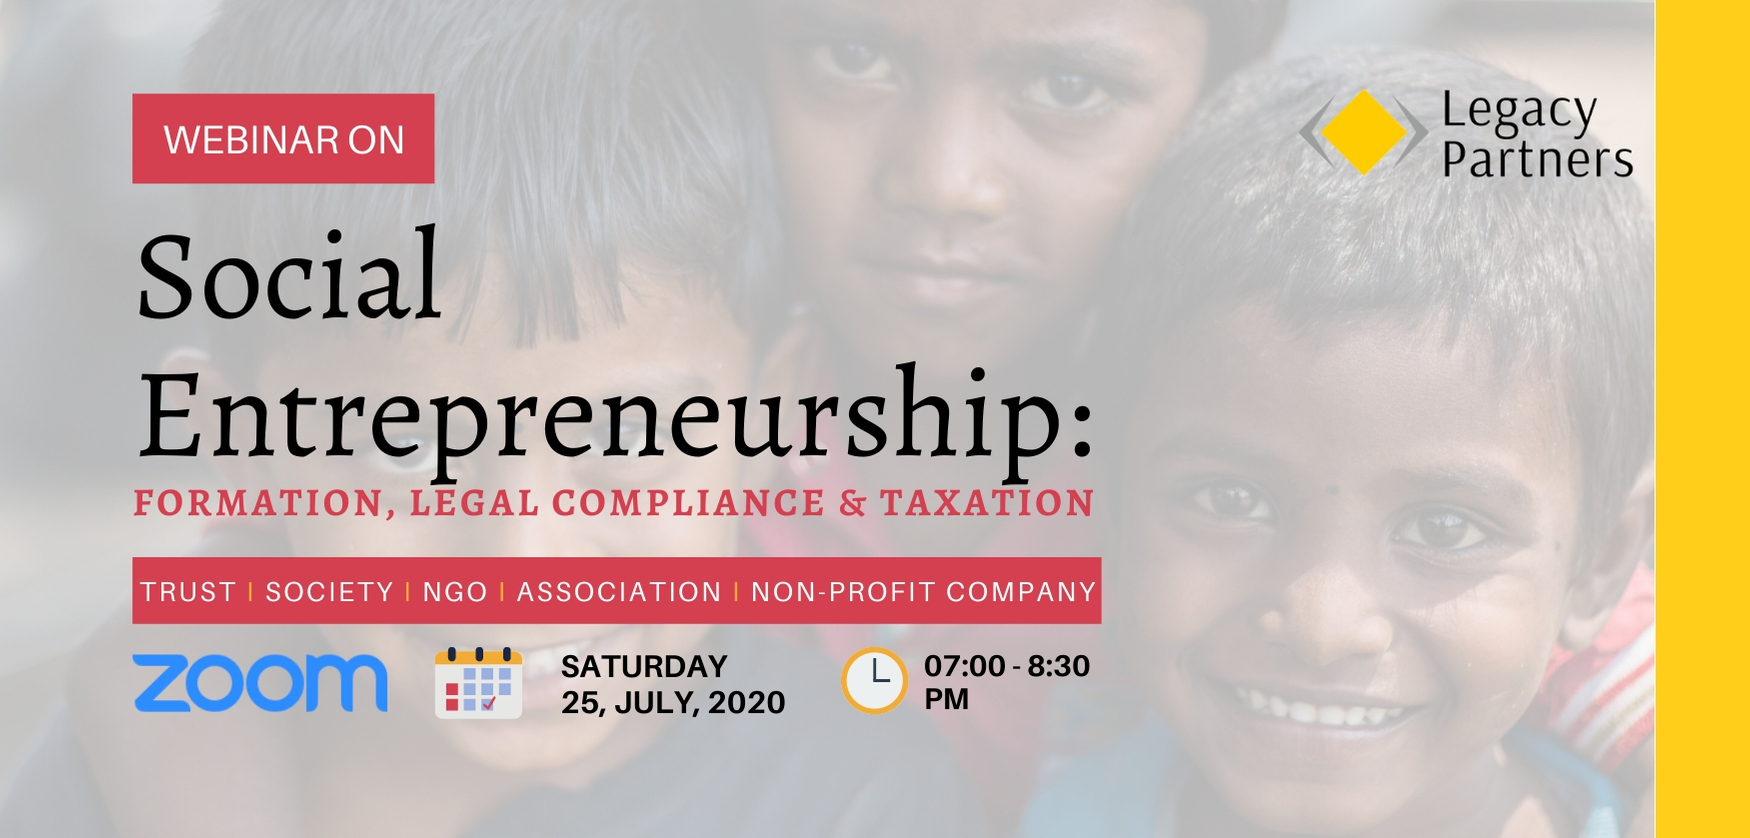 Webinar on Social Entrepreneurship: Formation, Legal Compliance and Taxation.